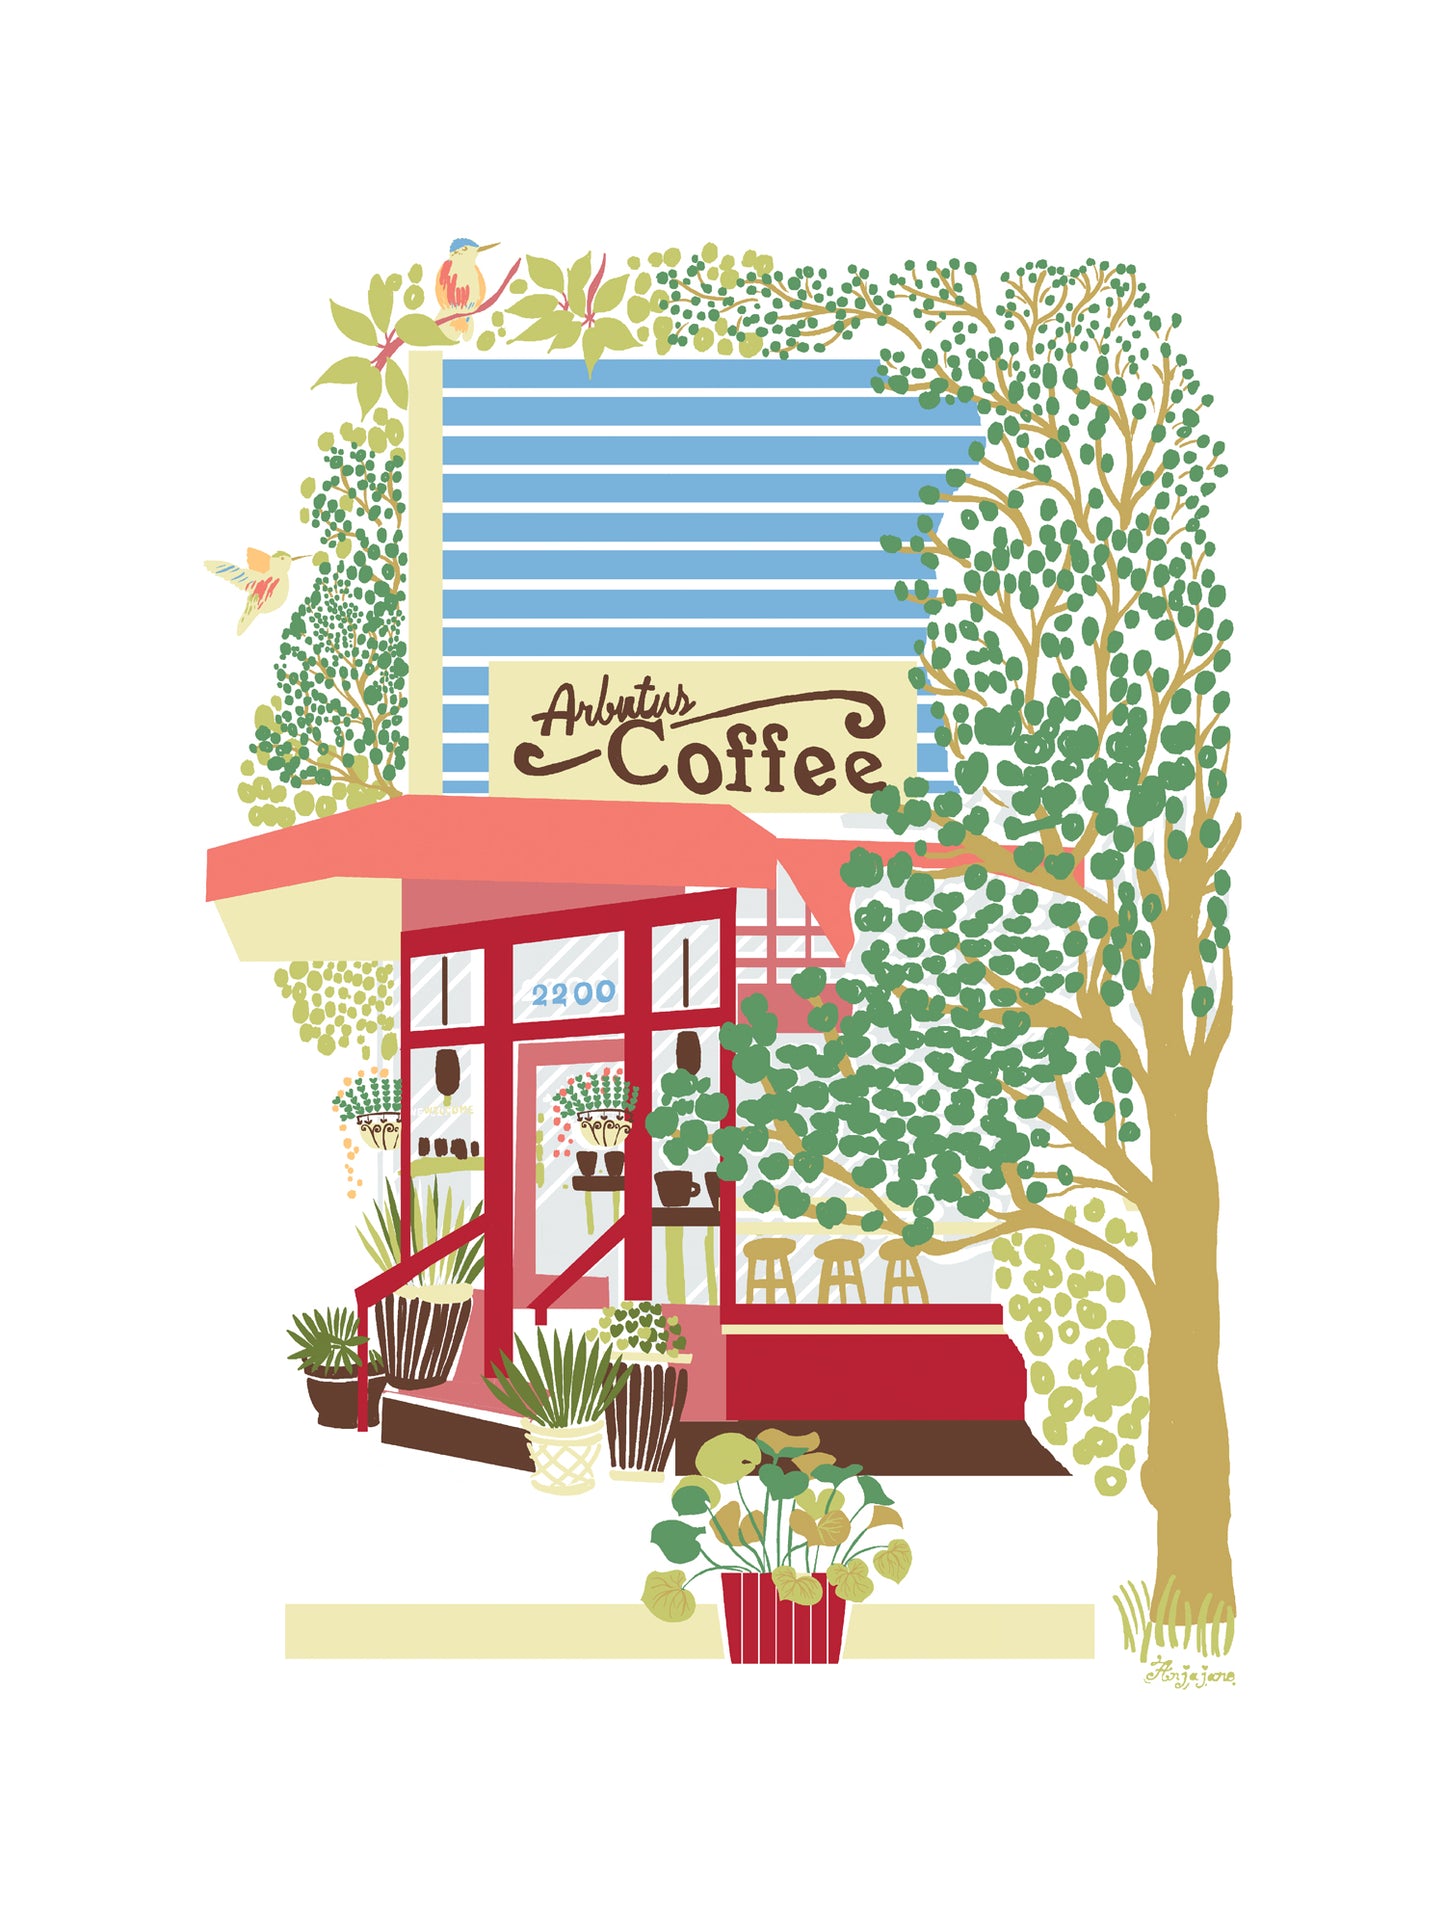 Arbutus Coffee Art Print